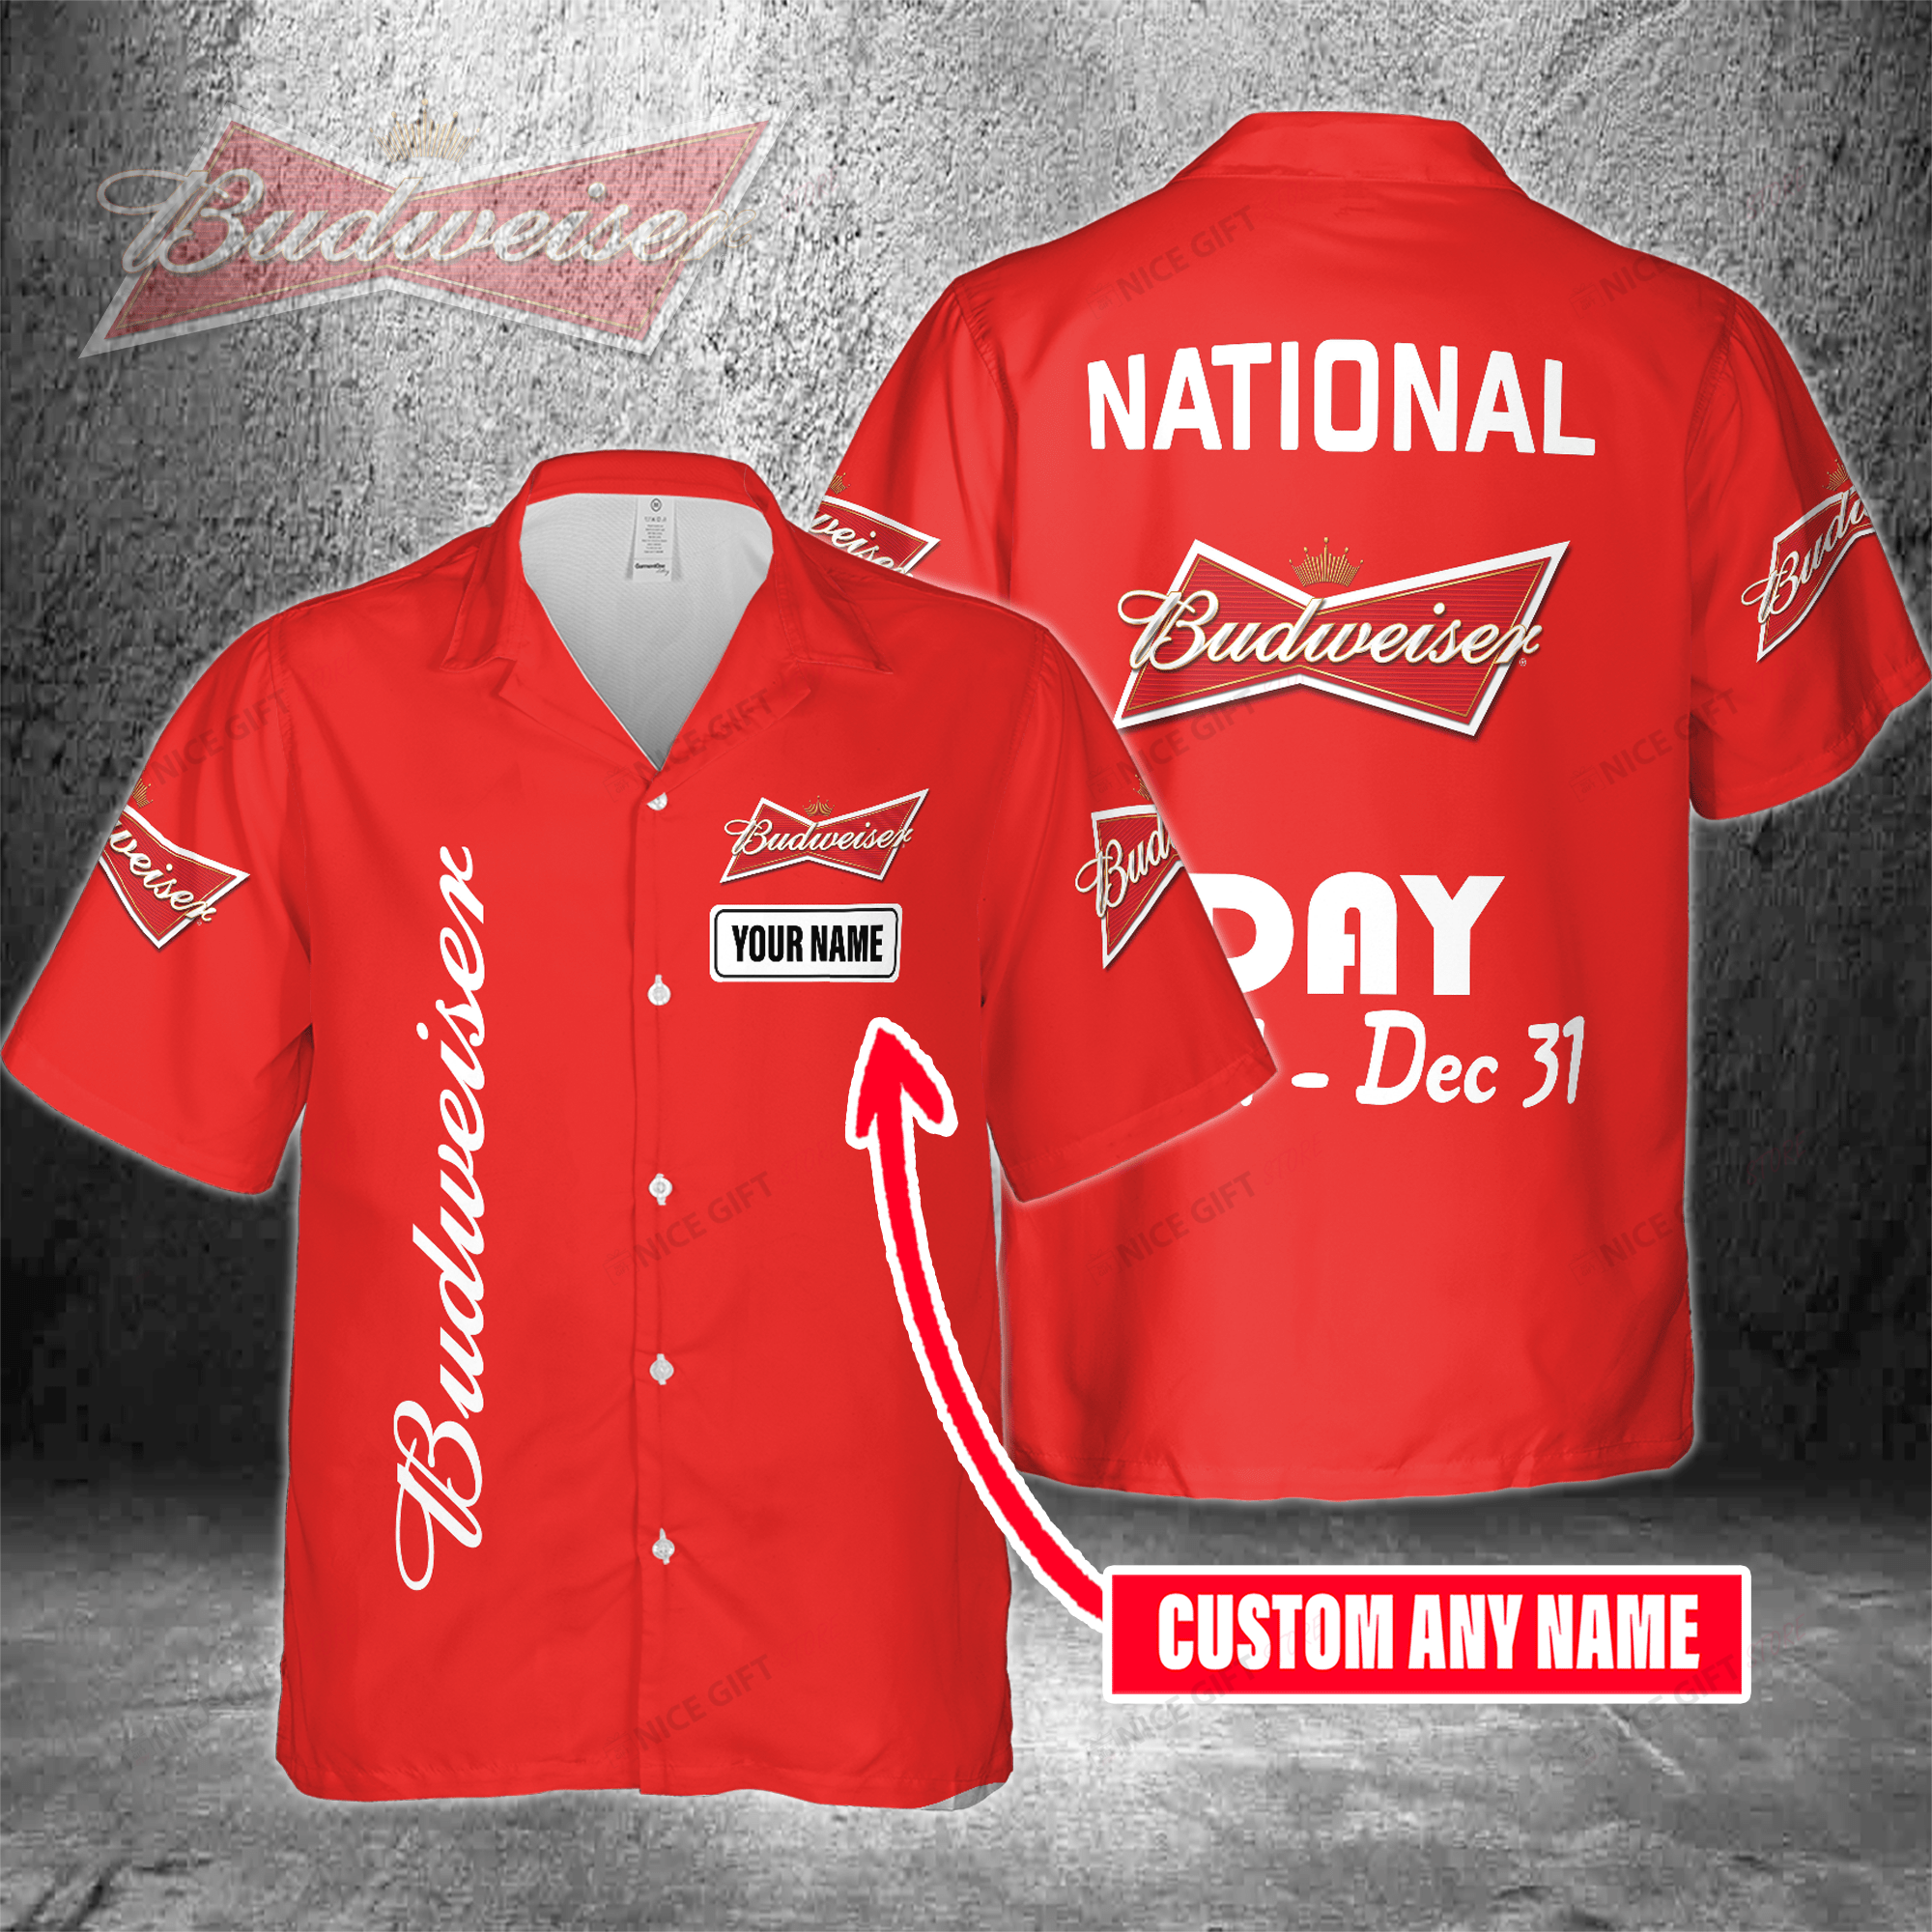 National Budweiser Day Jan 1 – Dec 31 Custom Name Hawaiian Shirt For Men And Women